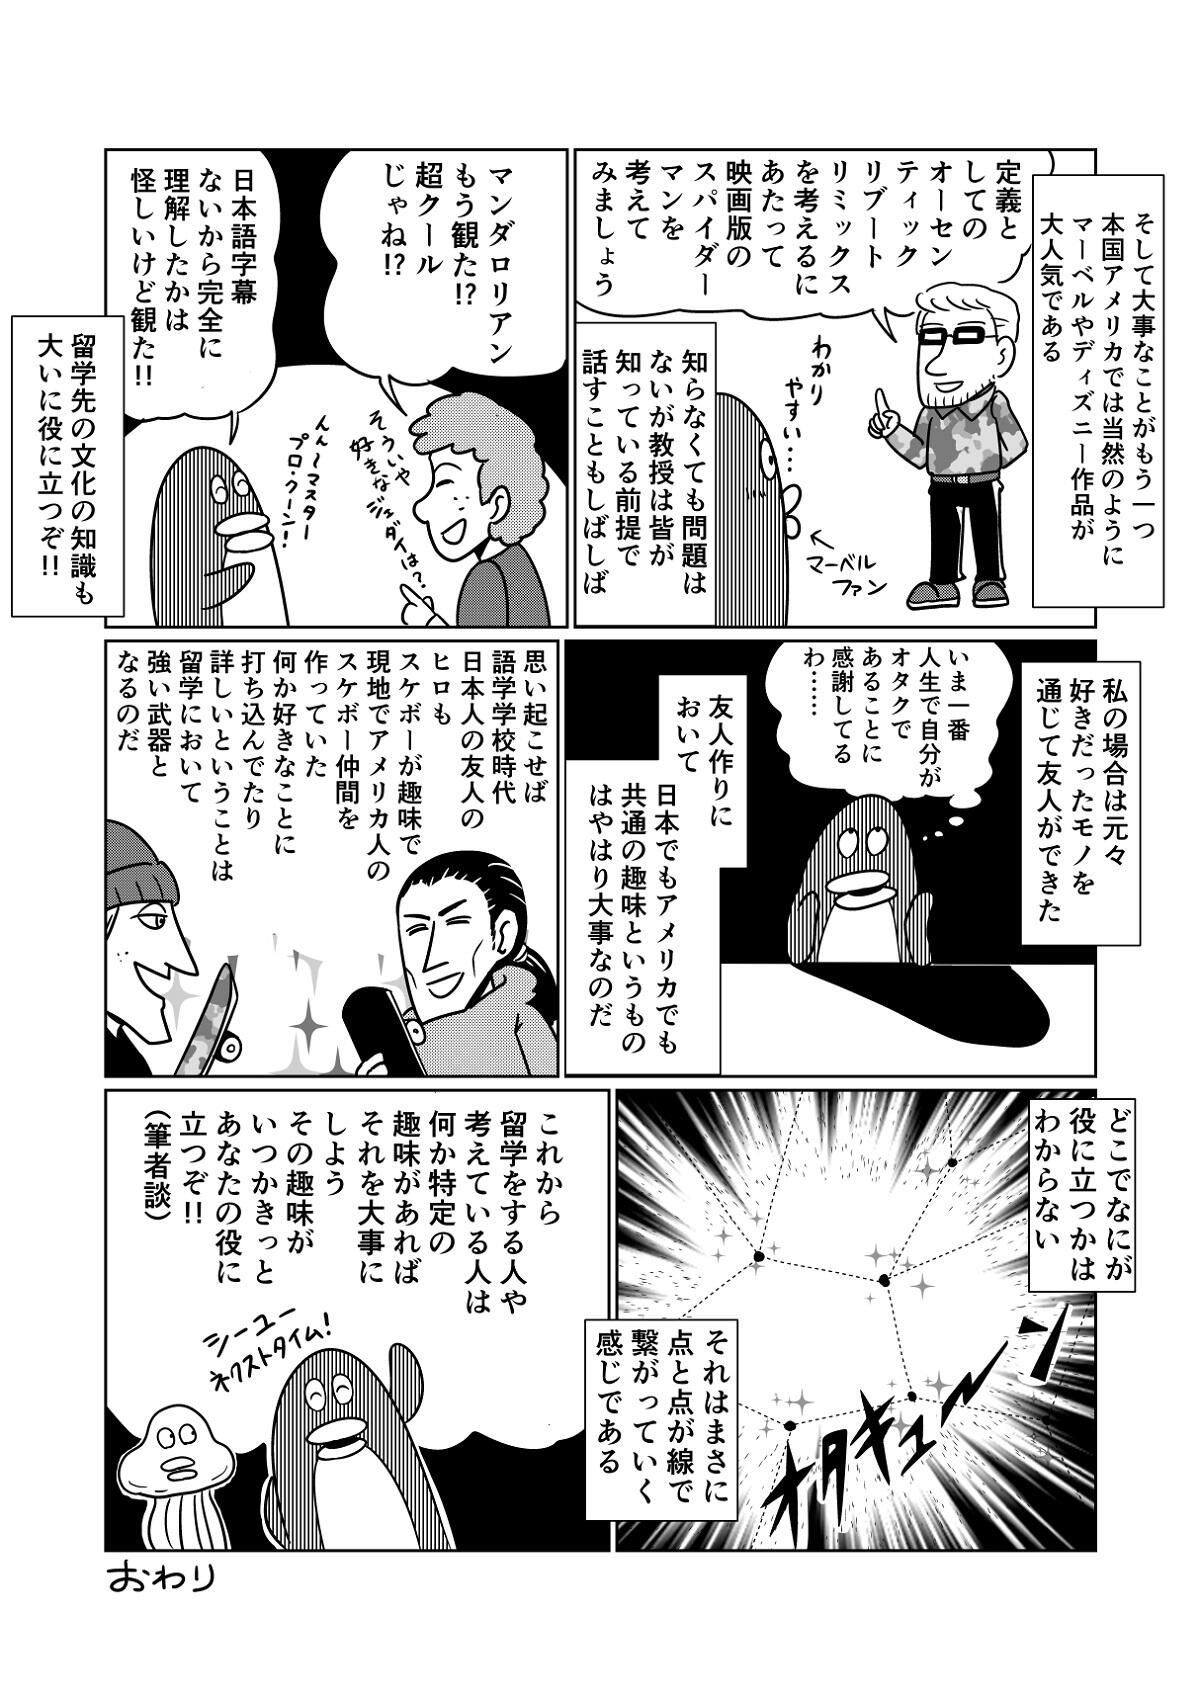 https://www.ryugaku.co.jp/column/images/8_6_1200.jpg